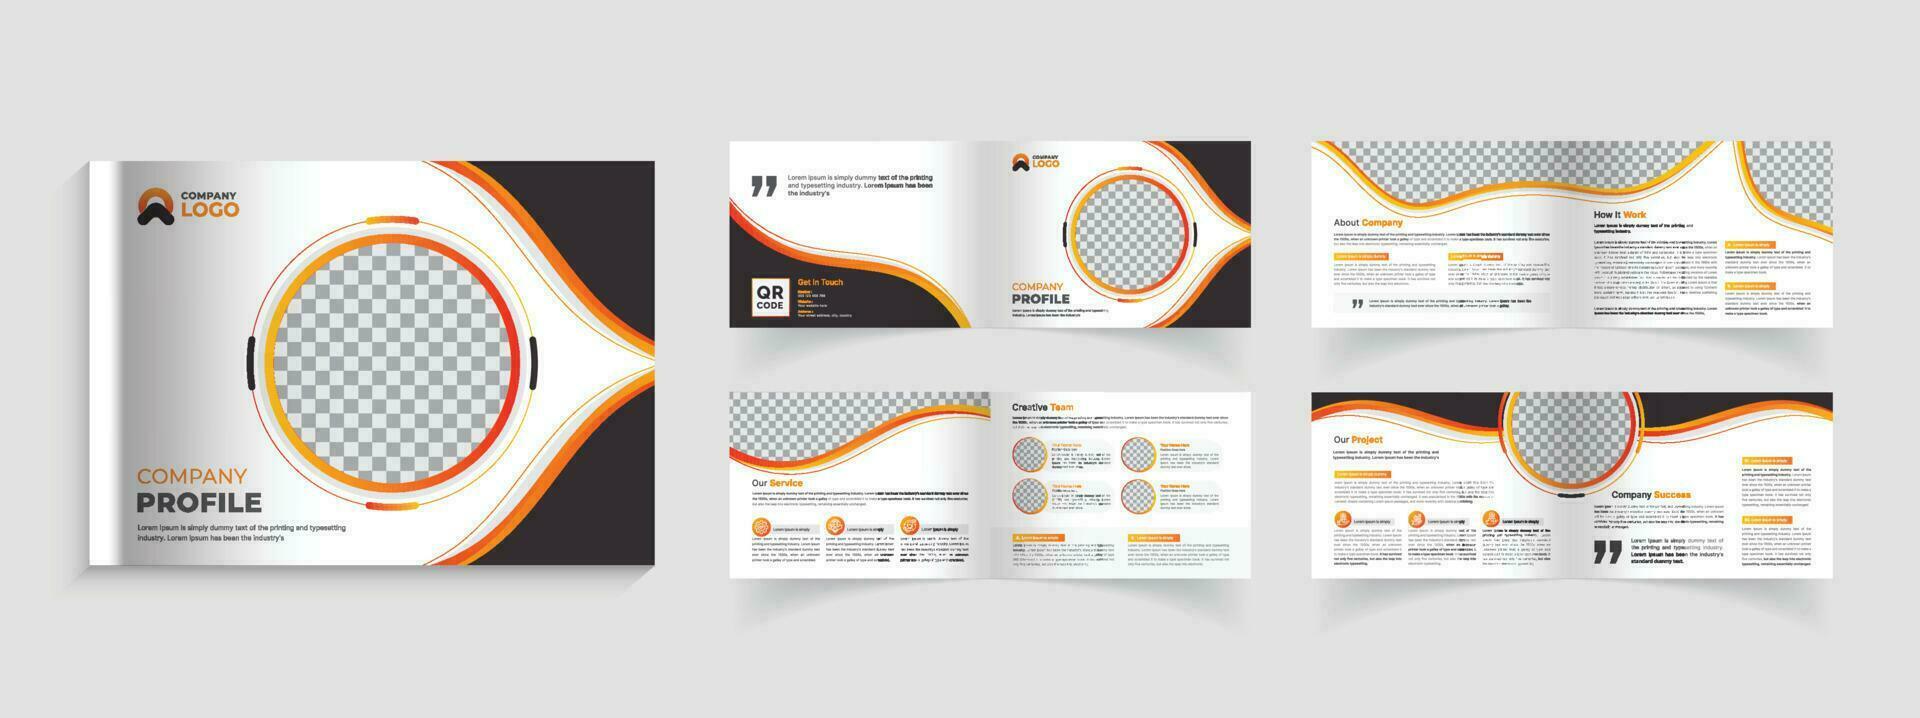 paisaje corporativo folleto diseño vector